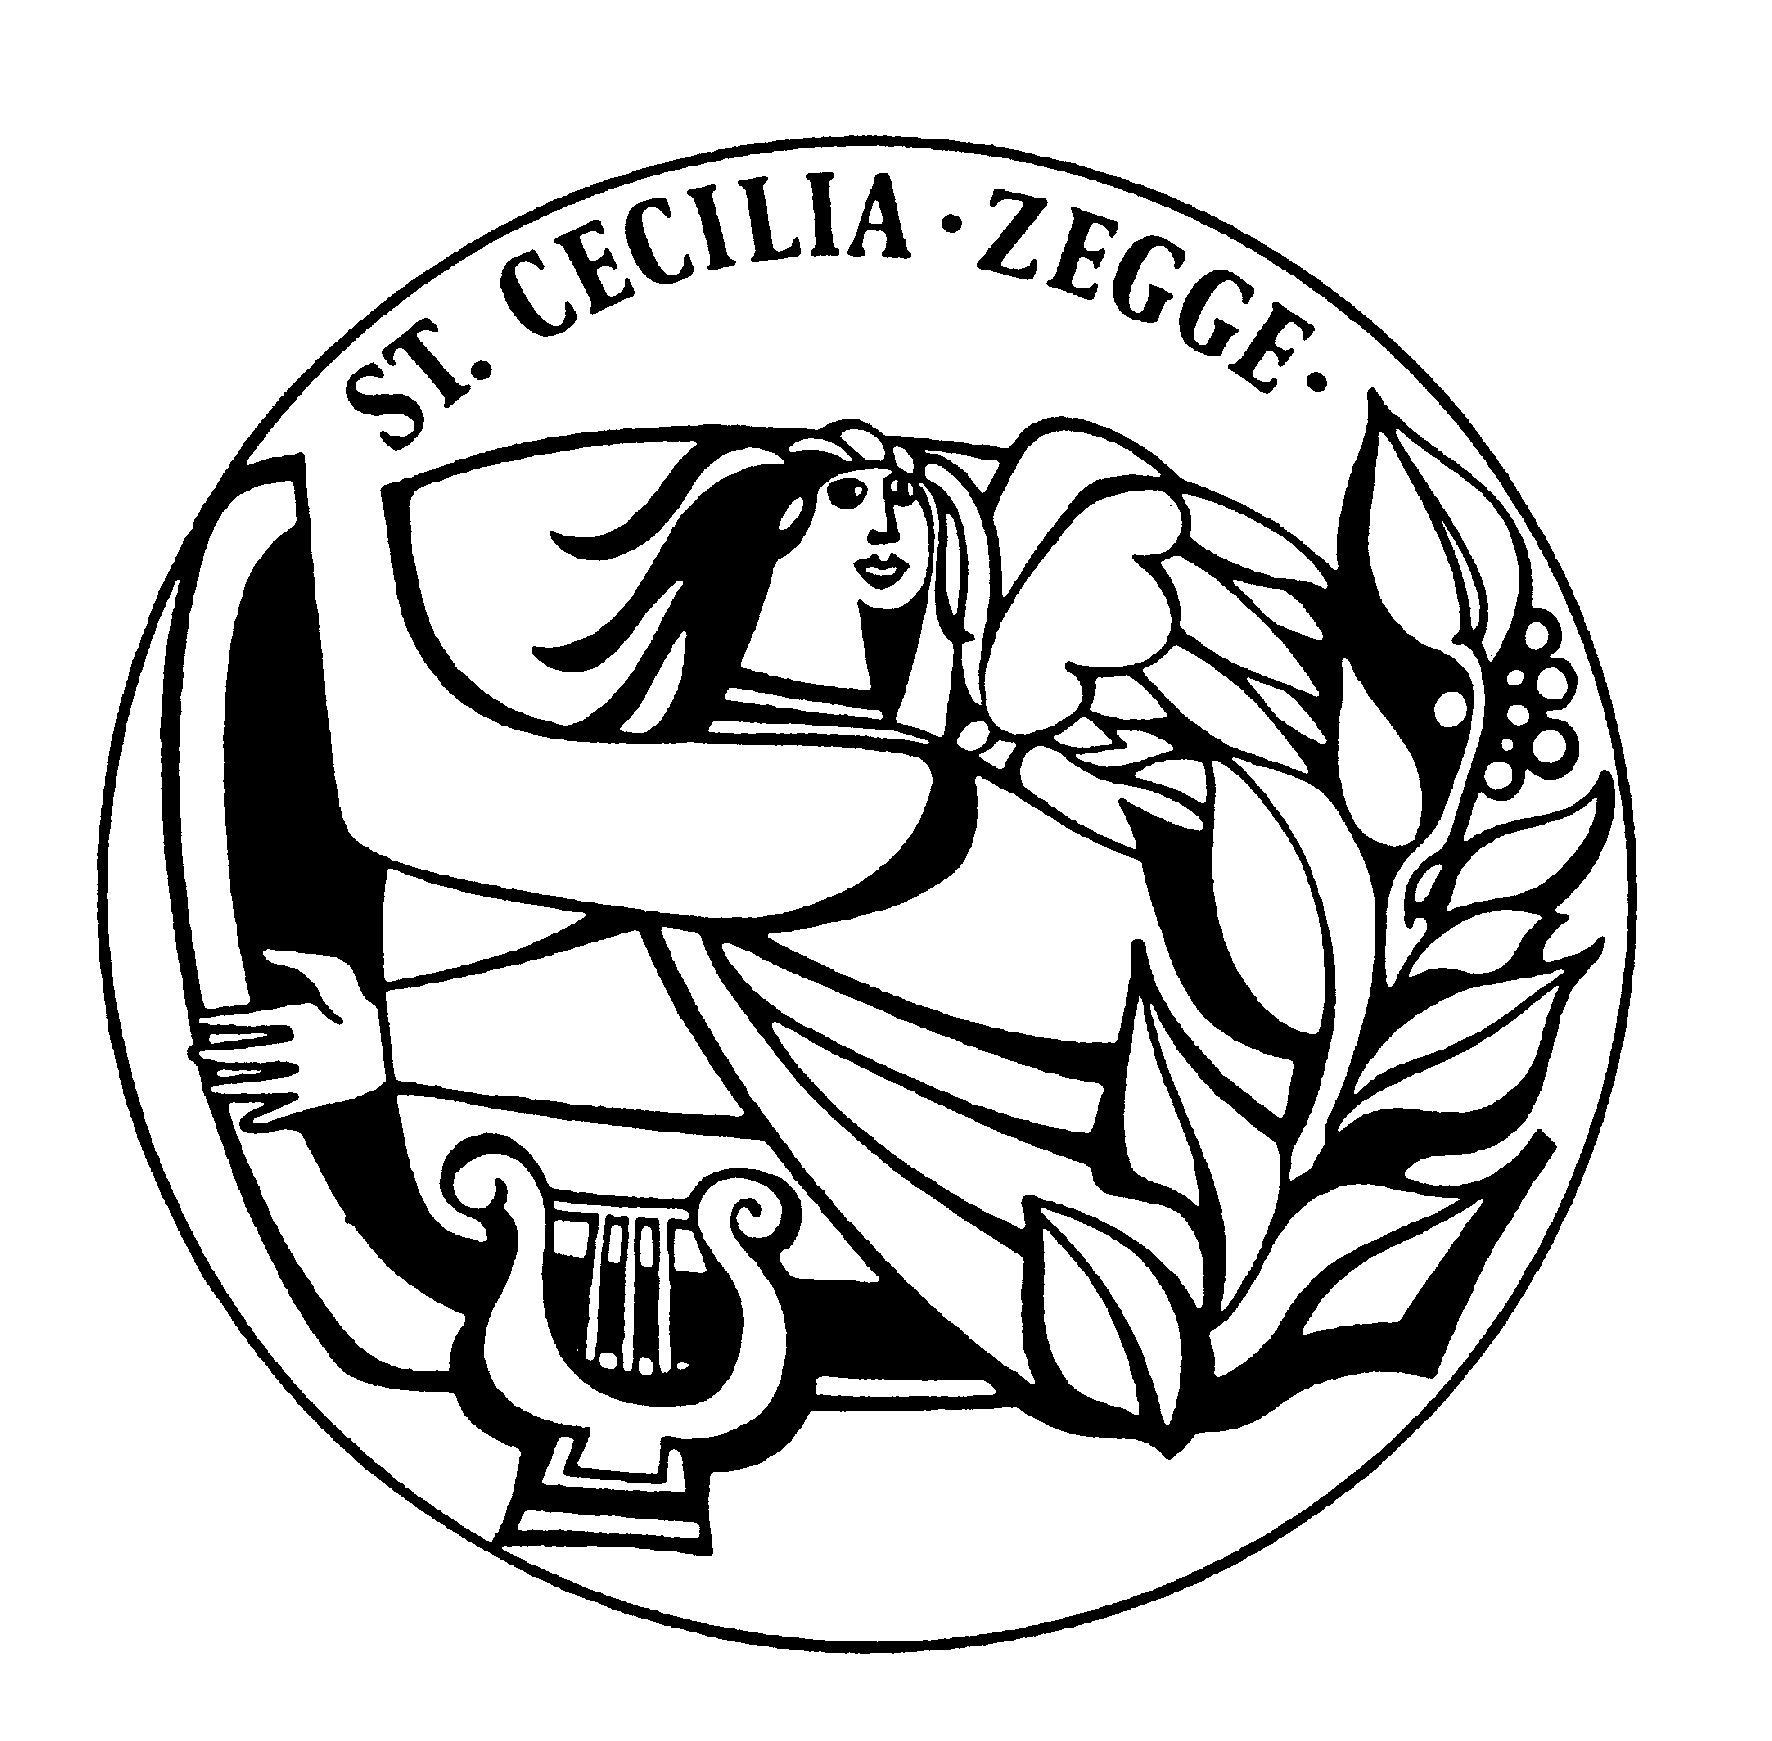 Harmonieorkest Sint Cecilia Zegge